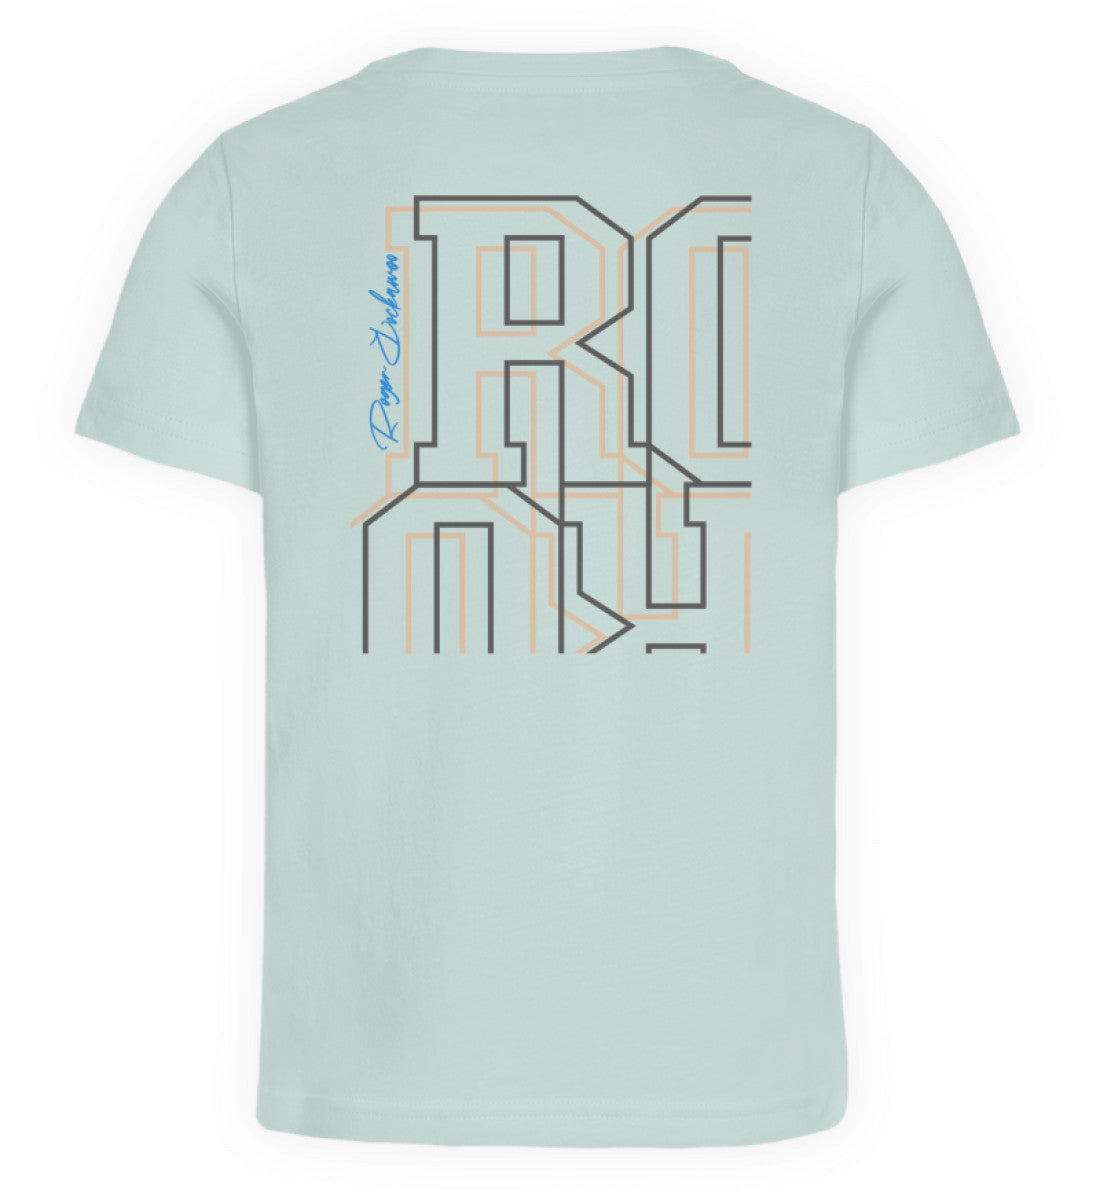 Carribean Blue farbiges Kinder T-Shirt für Mädchen und Jungen bedruckt mit dem Design der Roger Rockawoo Kollektion and then downhill MTB came along